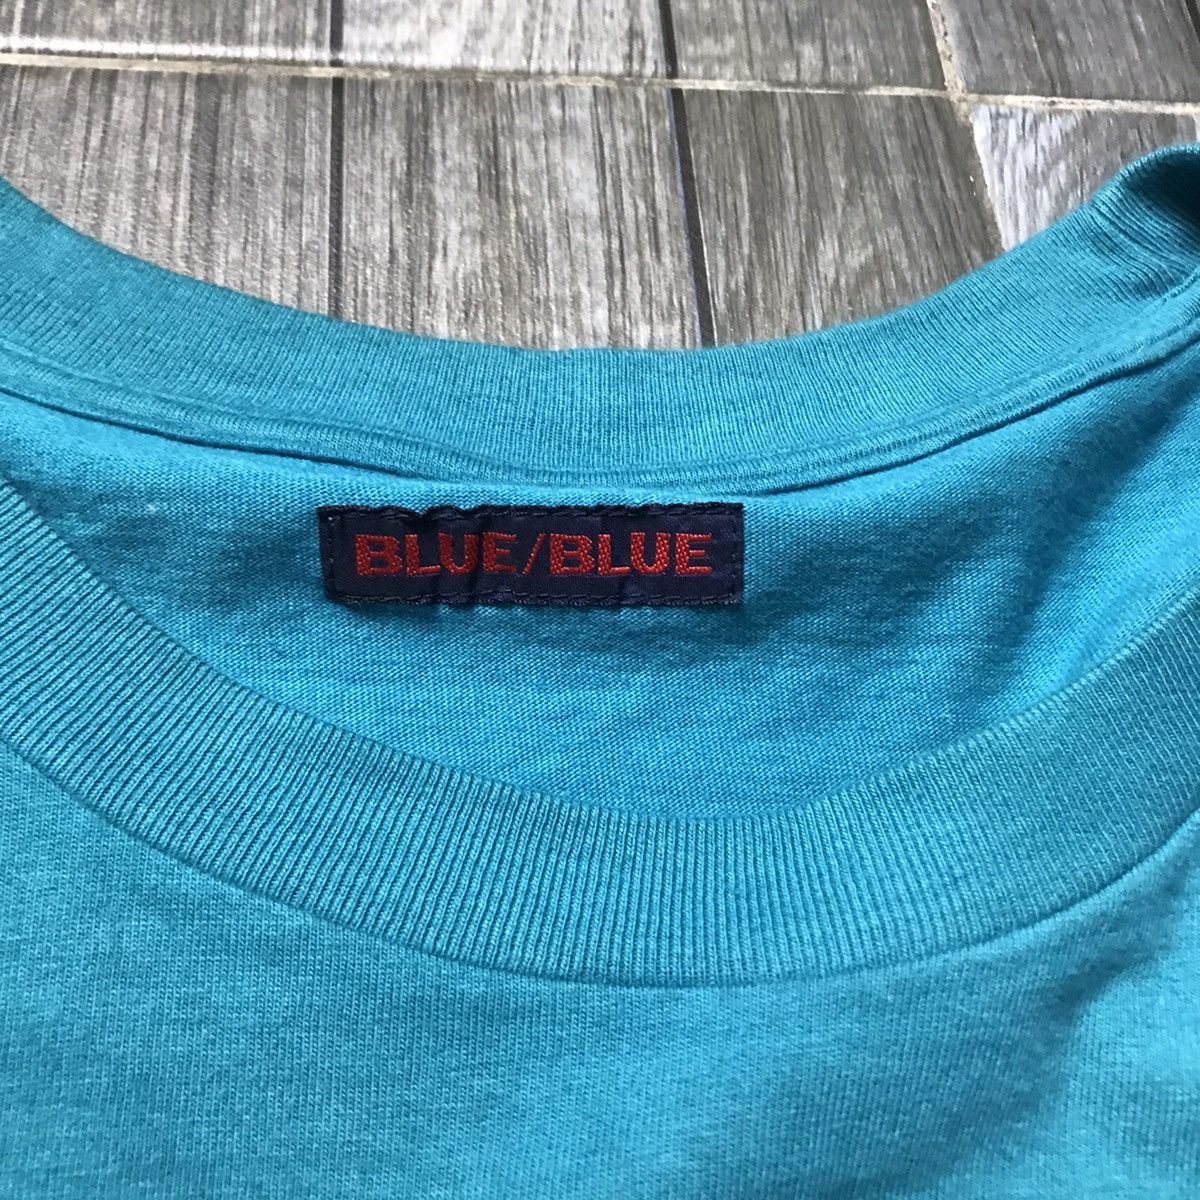 Vintage BLUE BLUE JAPAN long sleeves tshirt cw21 Size US L / EU 52-54 / 3 - 2 Preview